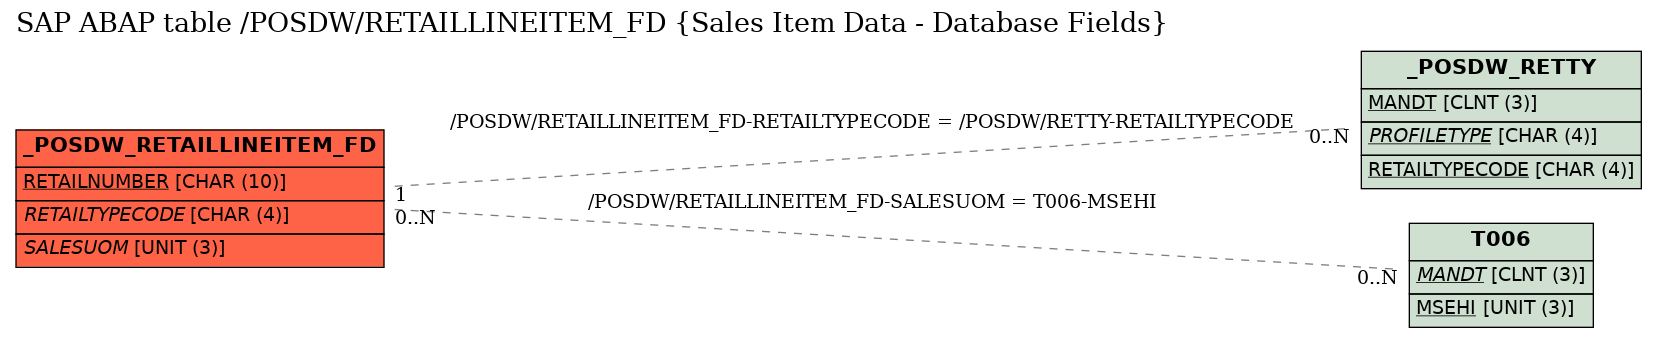 E-R Diagram for table /POSDW/RETAILLINEITEM_FD (Sales Item Data - Database Fields)